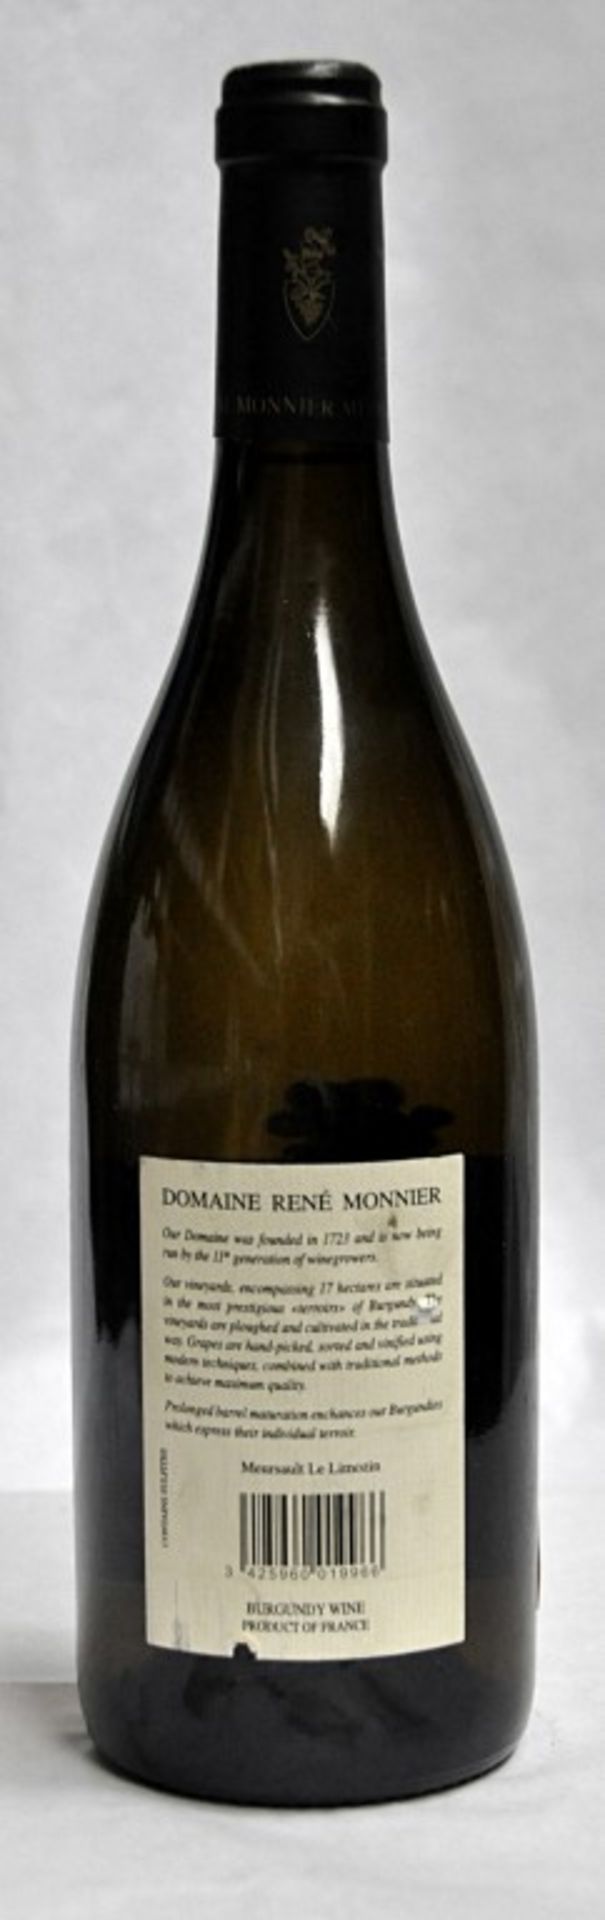 1 x Rene Monnier Meursault Le Limozin – 2011 – French Wine - Bottle Size 75cl - Volume 13% - Ref - Image 4 of 4